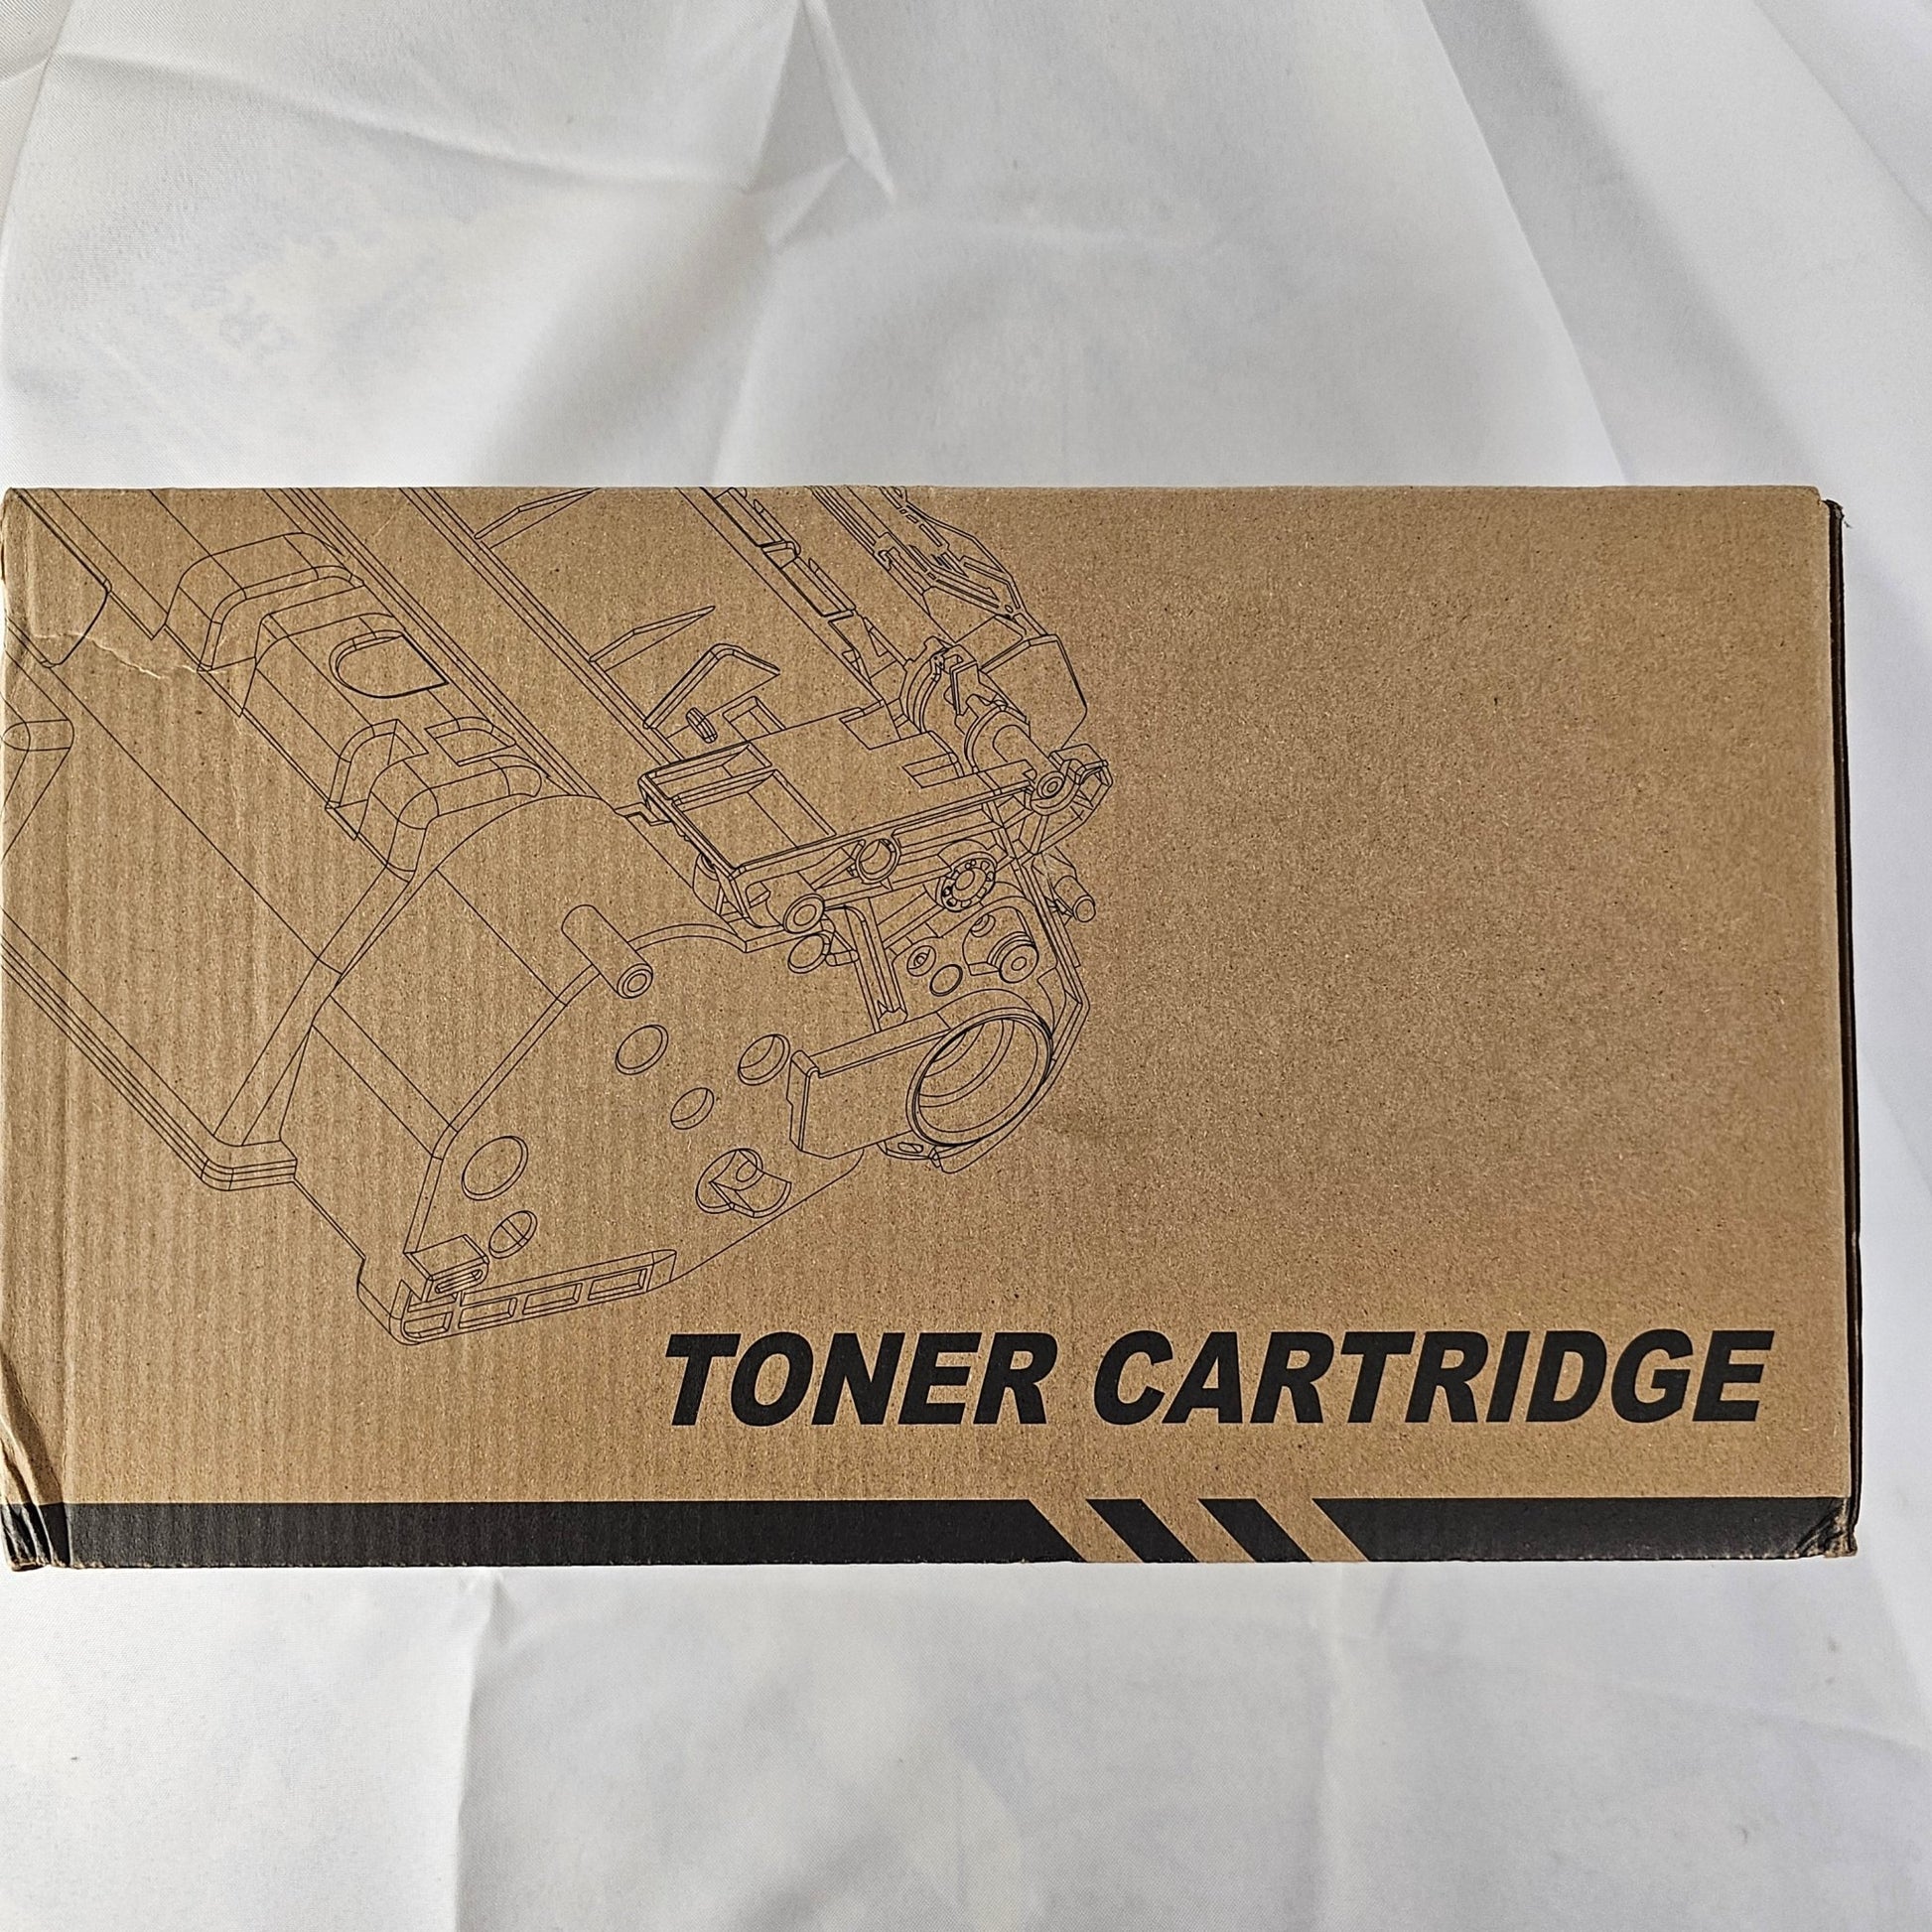 Tounker 206a Toner Cartridges 4 Pack - DQ Distribution